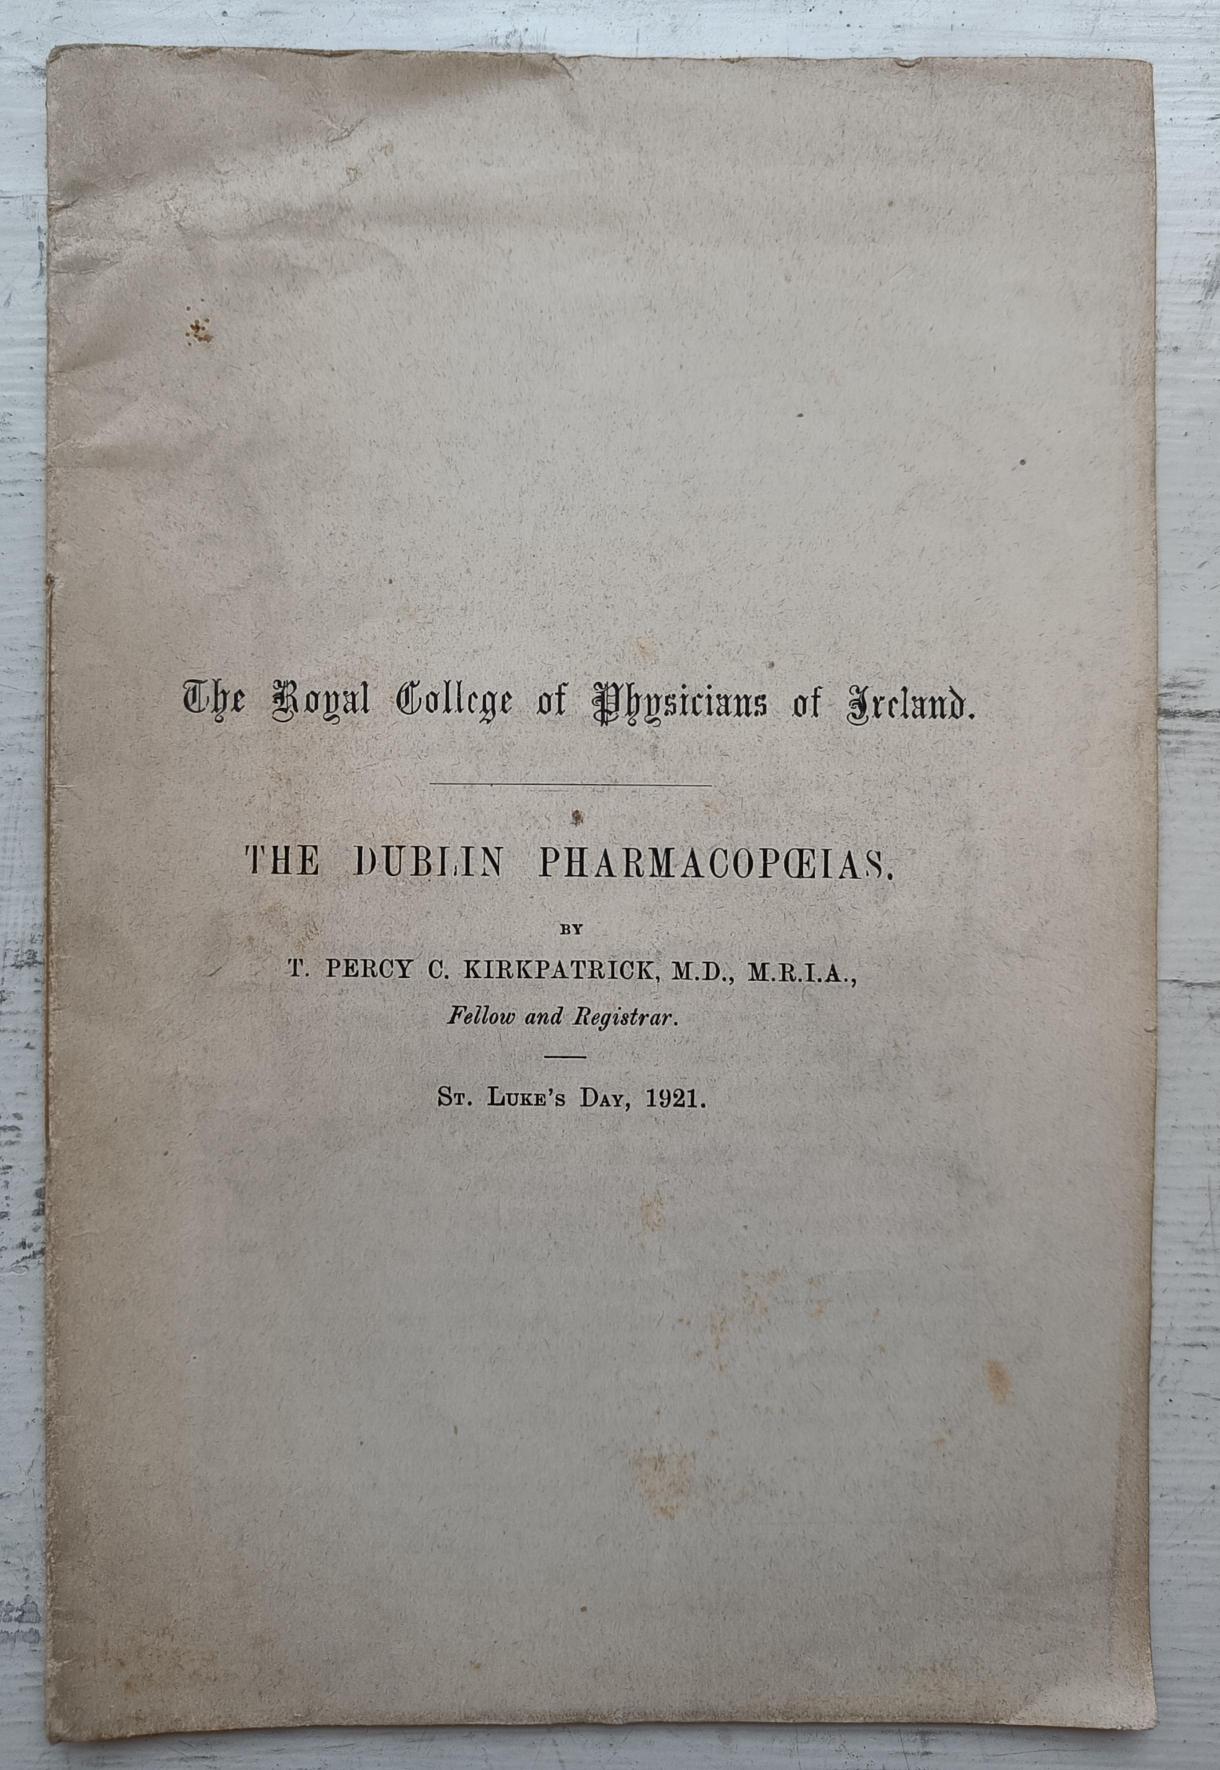 The Dublin Pharmacopoeias - T. Percy C. Kirkpatrick